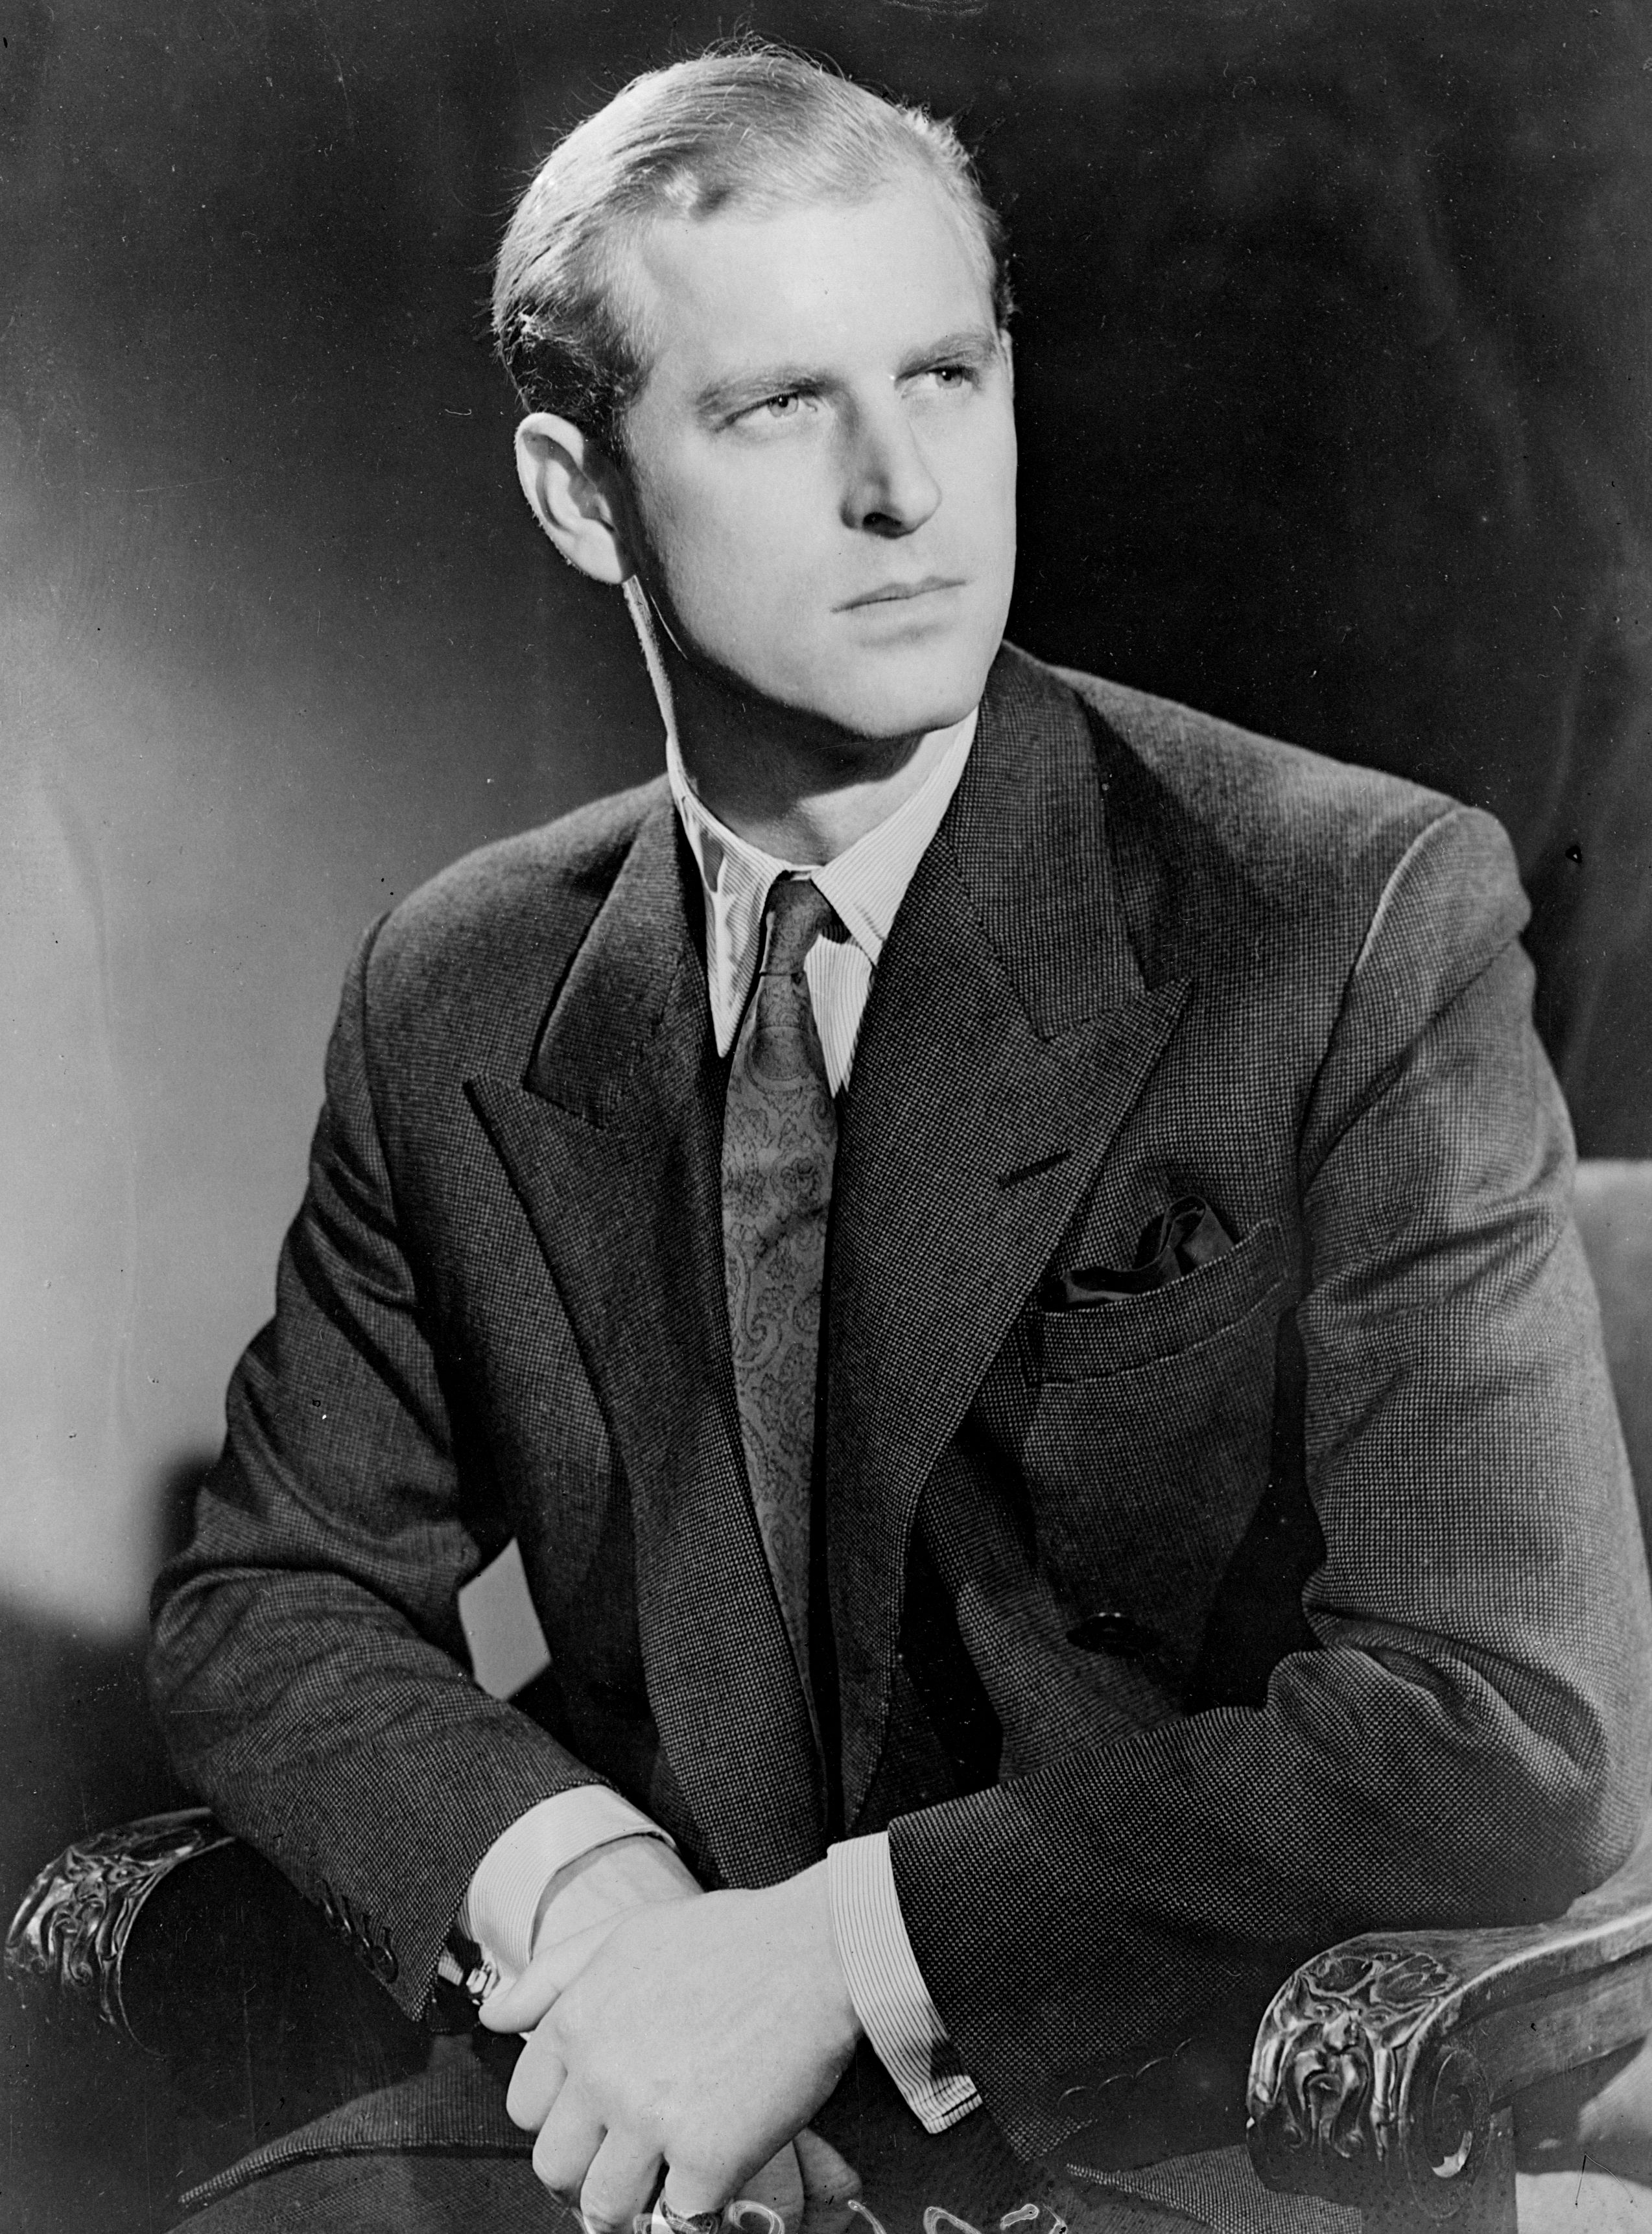 Black-and-white portrait of  Lieutenant Philip Mountbatten, later Prince Philip